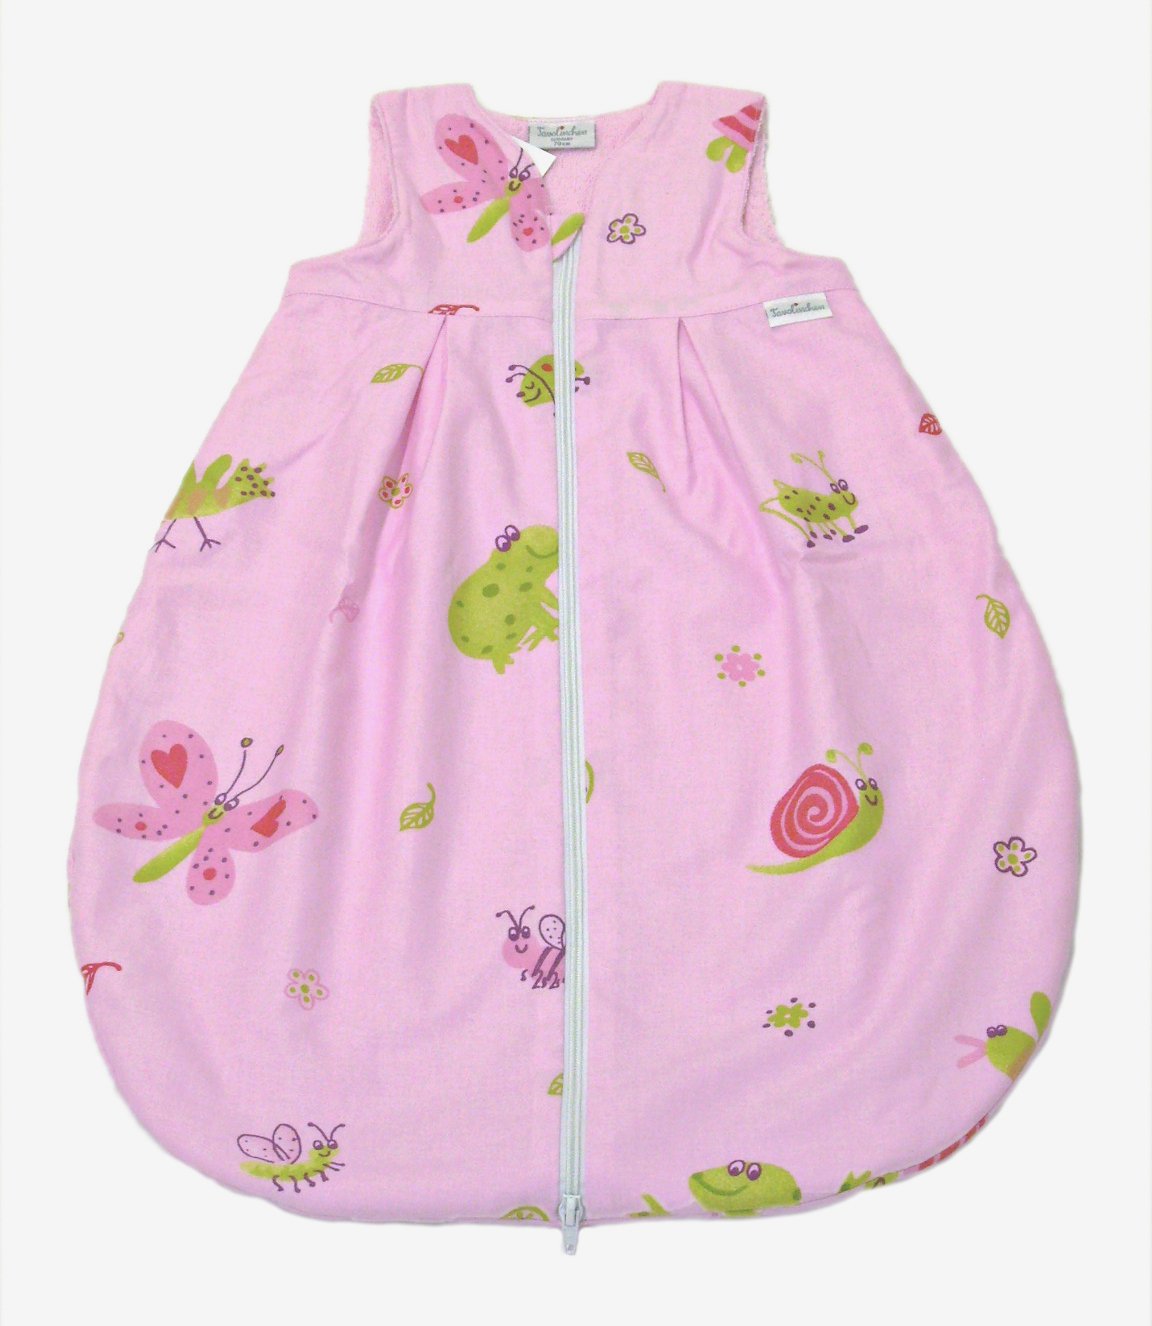 Tavo Tavolinchen 3522411043 Terry Cloth Sleeping Bag Frog Size 110 Pink